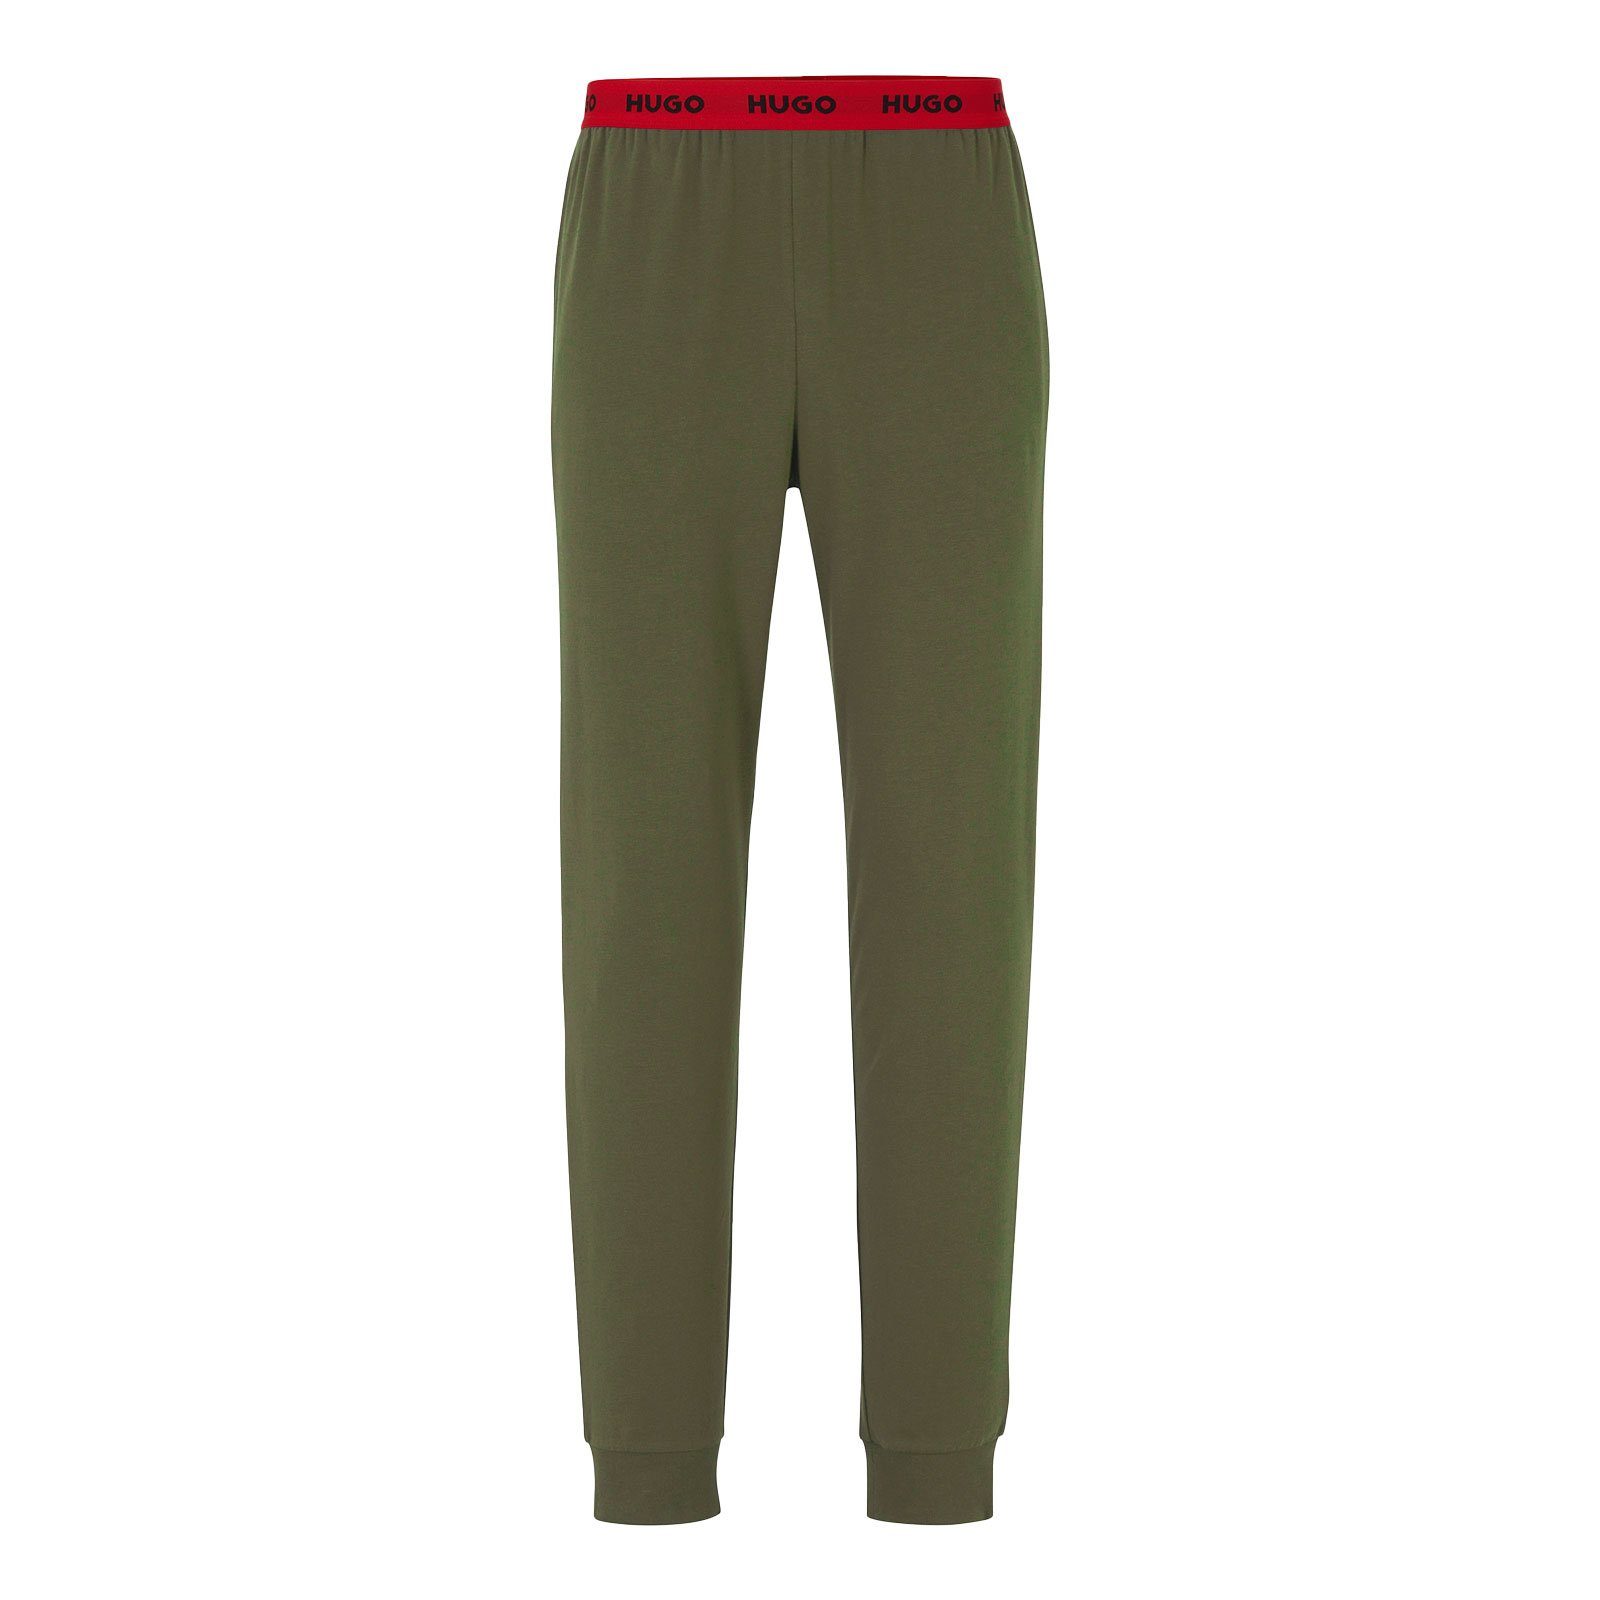 HUGO mit Elastikbund 345 Linked Pants sichtbarem Pyjamahose green open